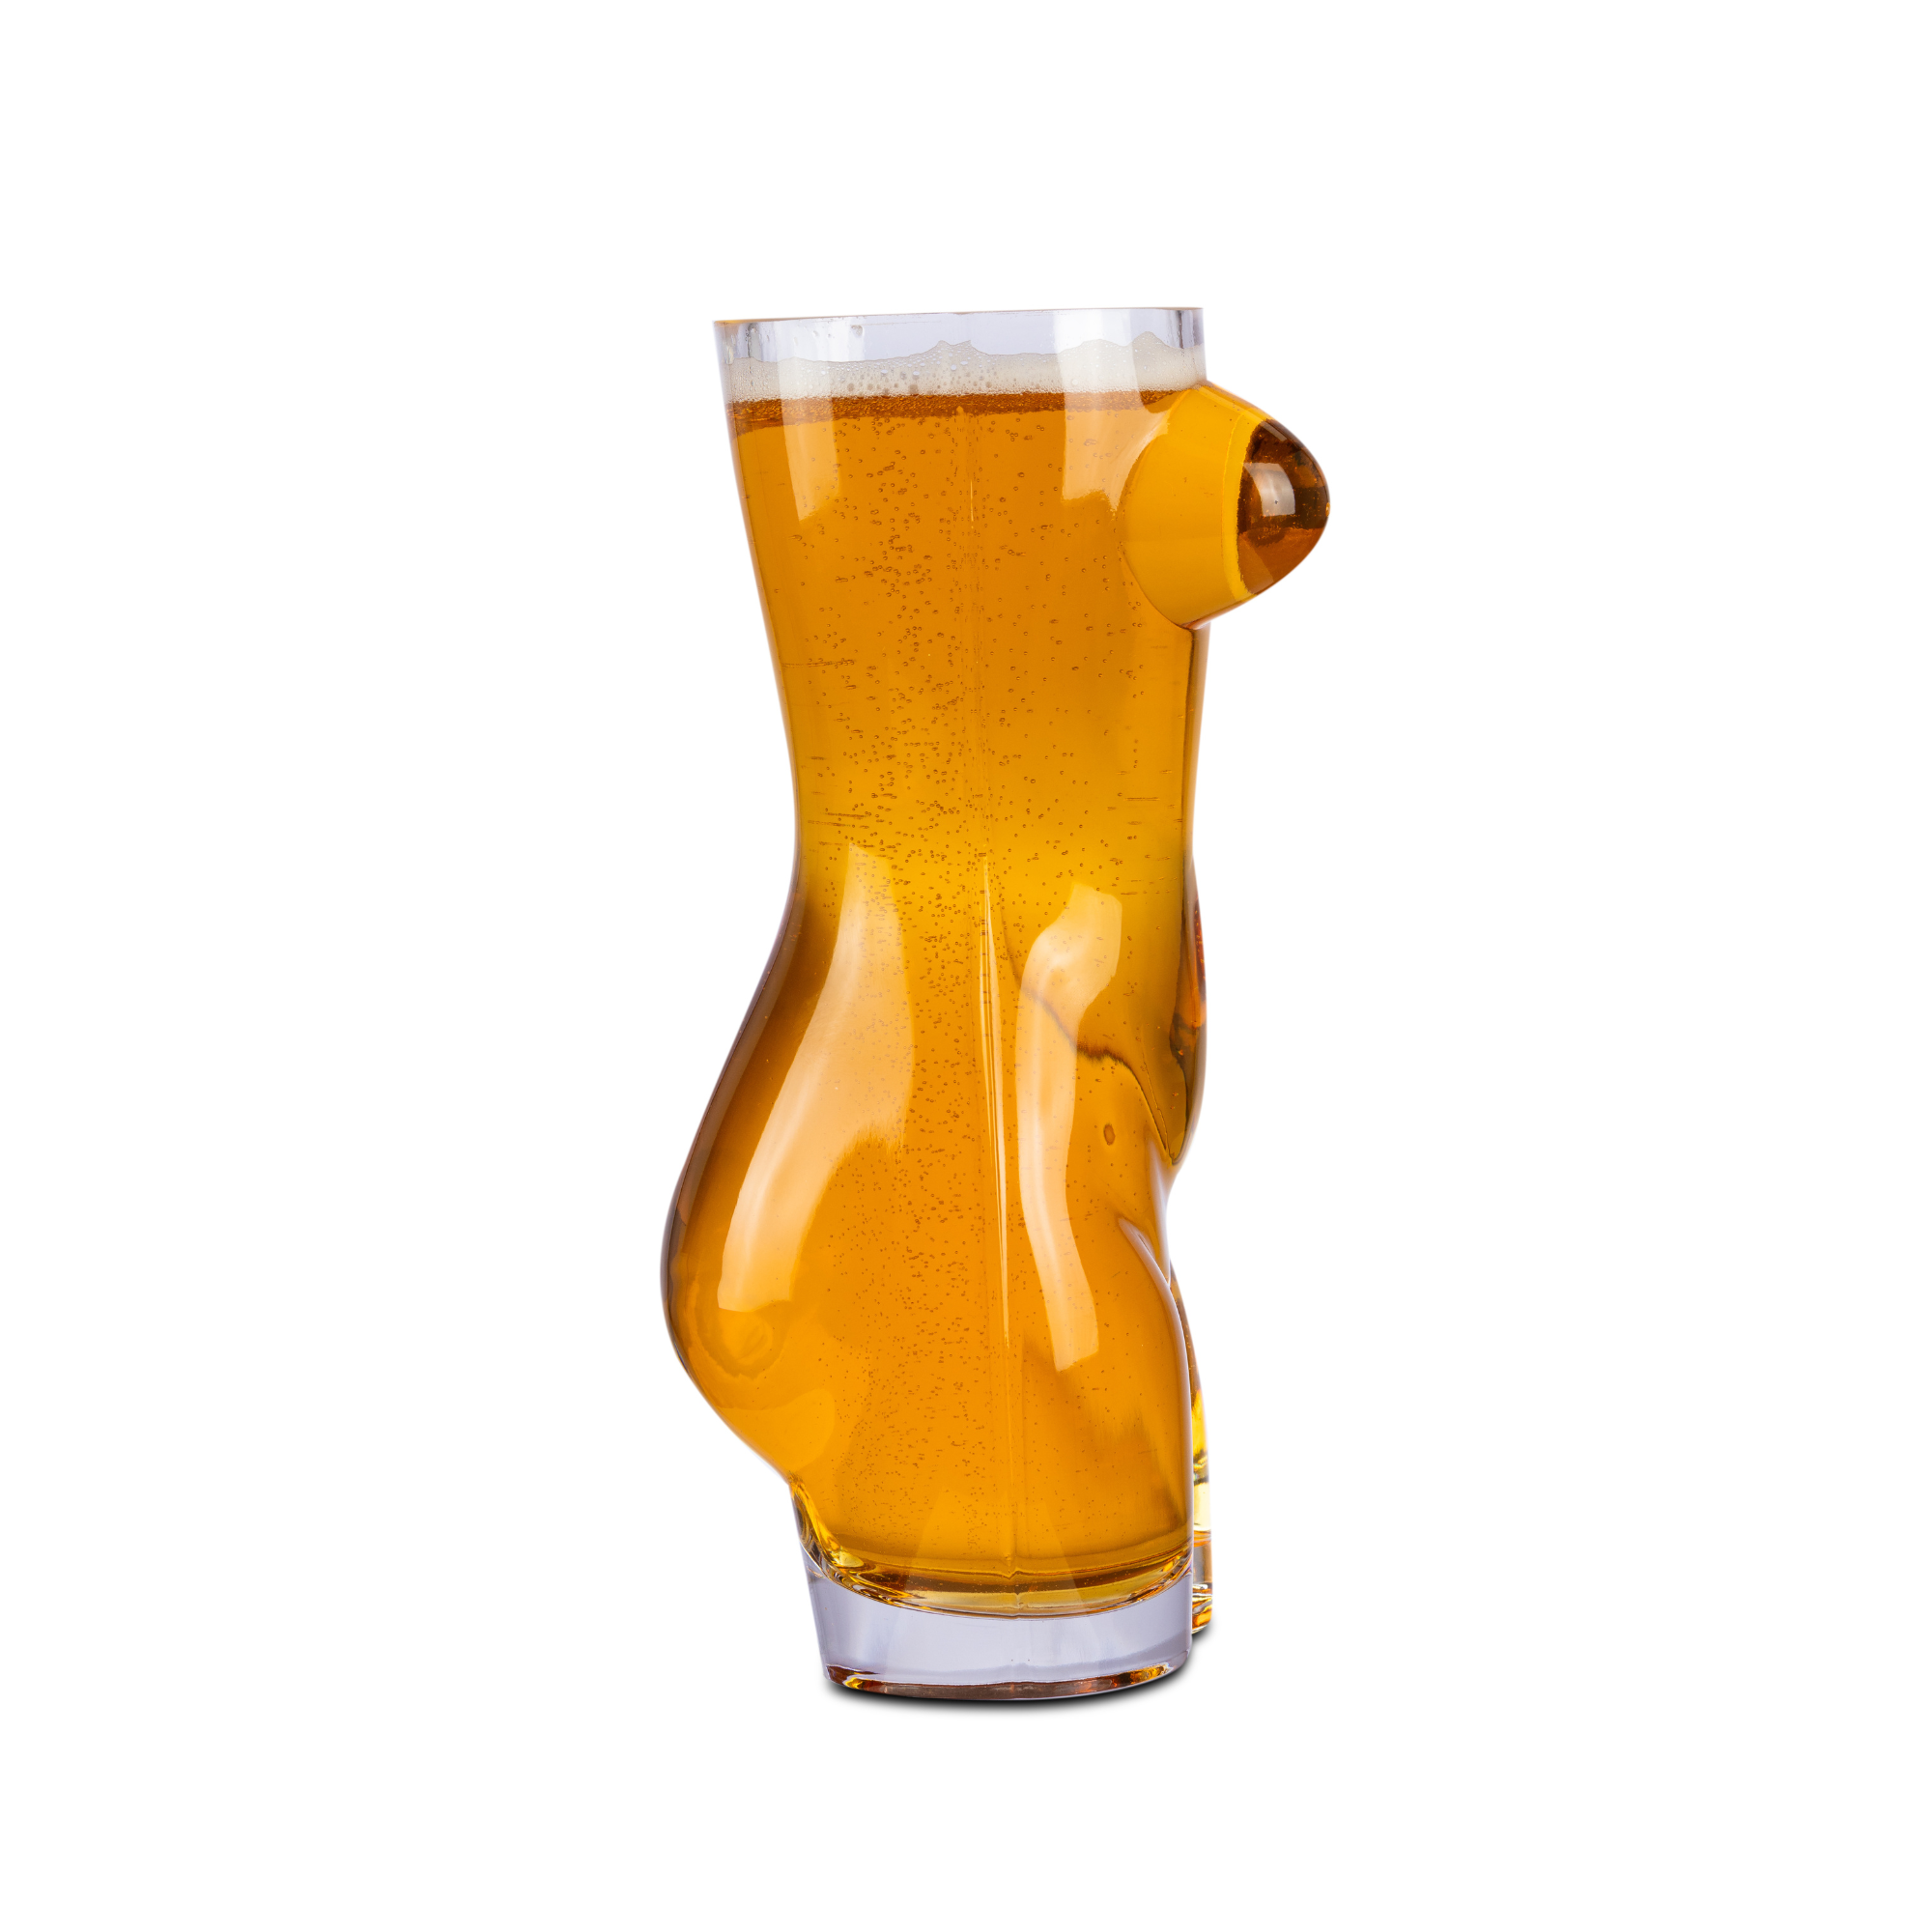 Sexy Lady Torso Novelty Beer Glass 2.75 Pint at drinkstuff